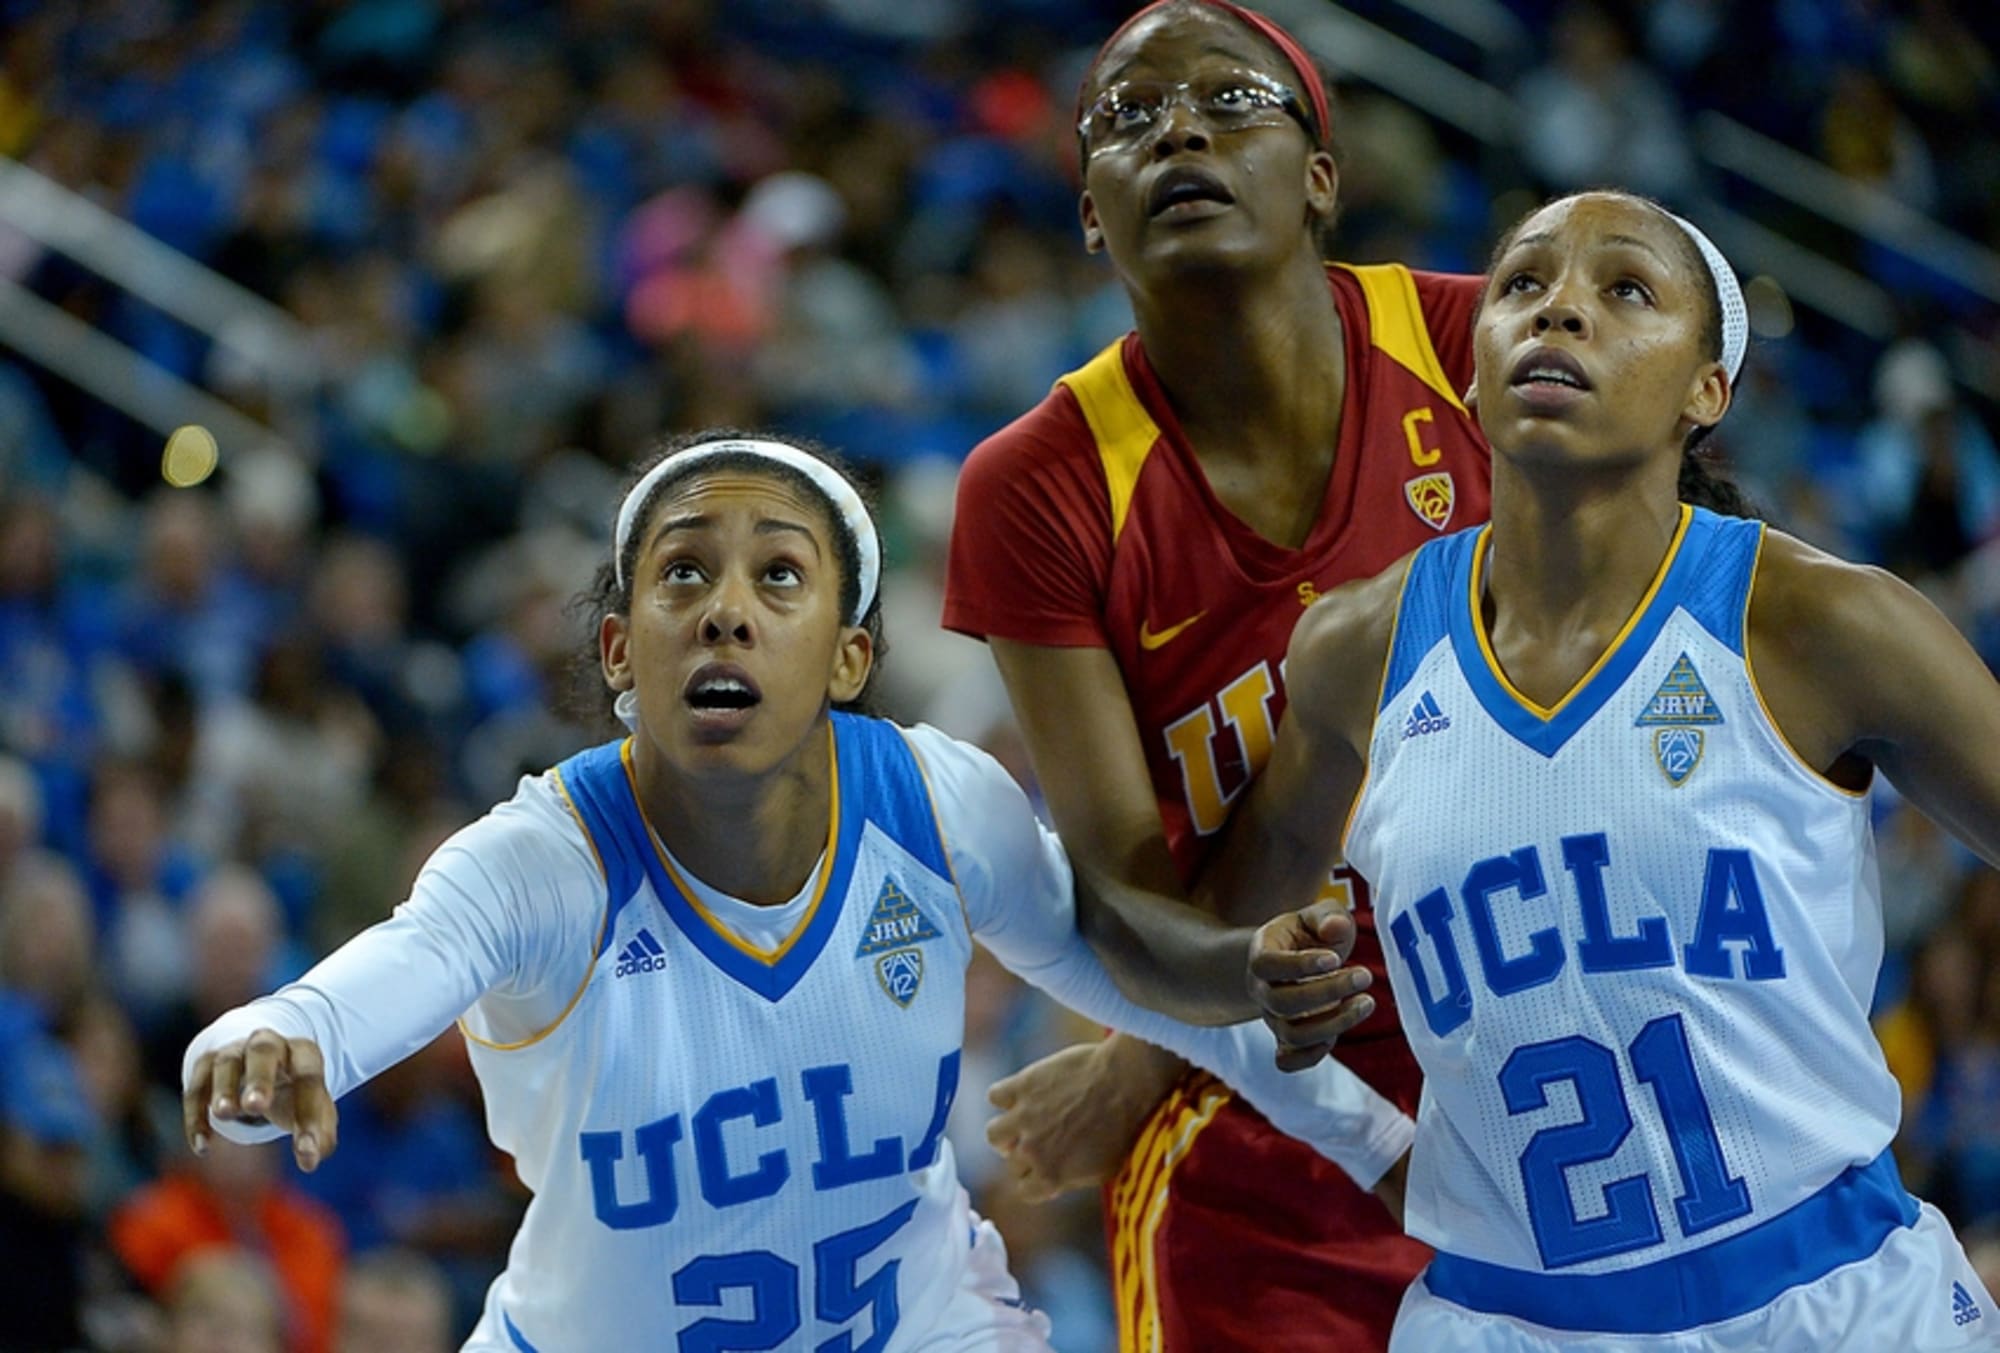 UCLA Women's Basketball Look For The Season Sweep Against USC